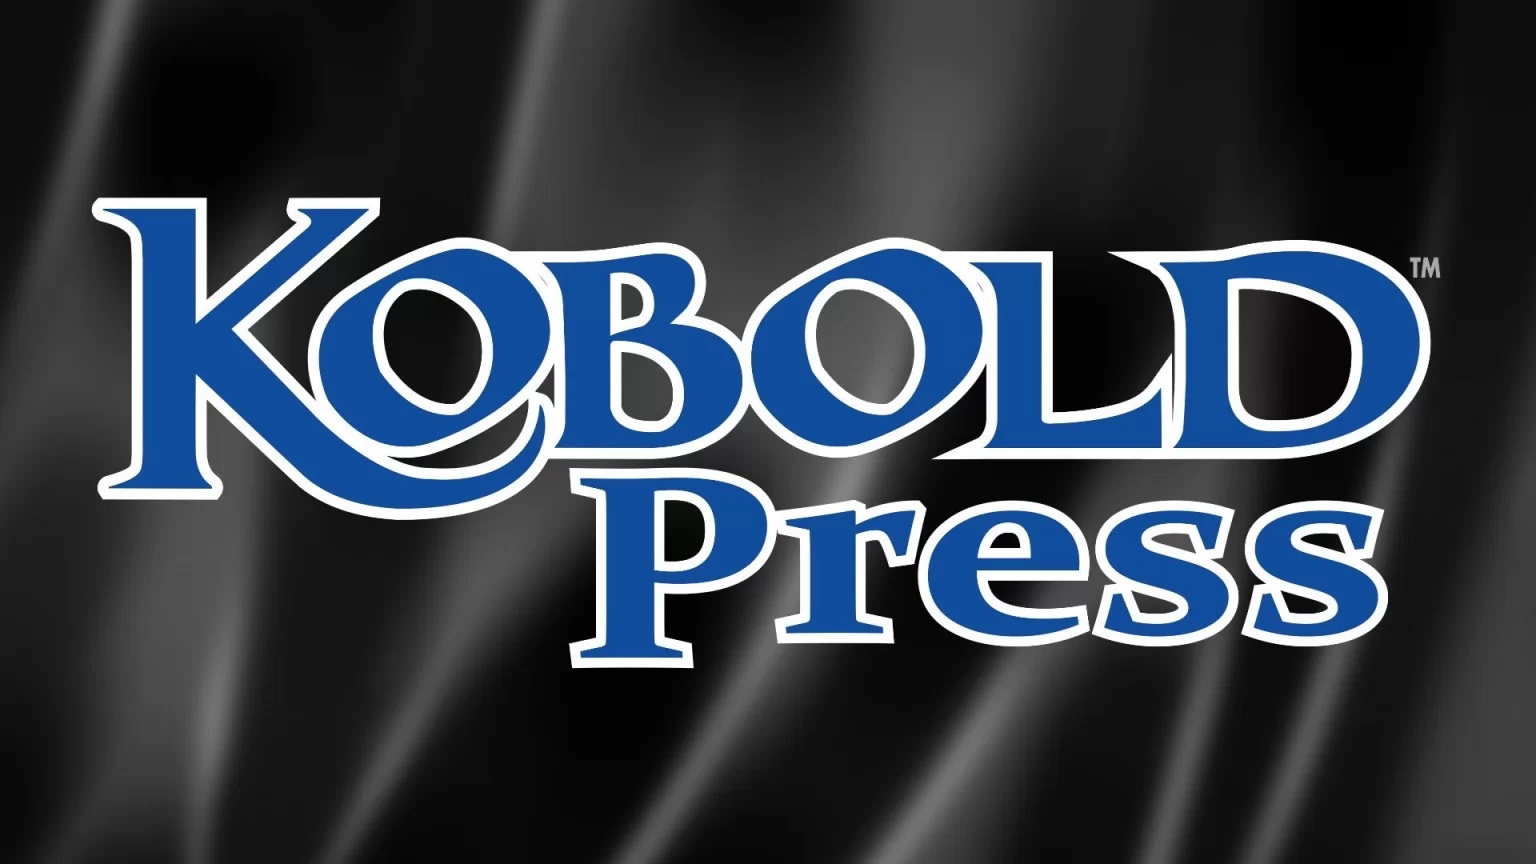 Kobold Press Dungeons and Dragons